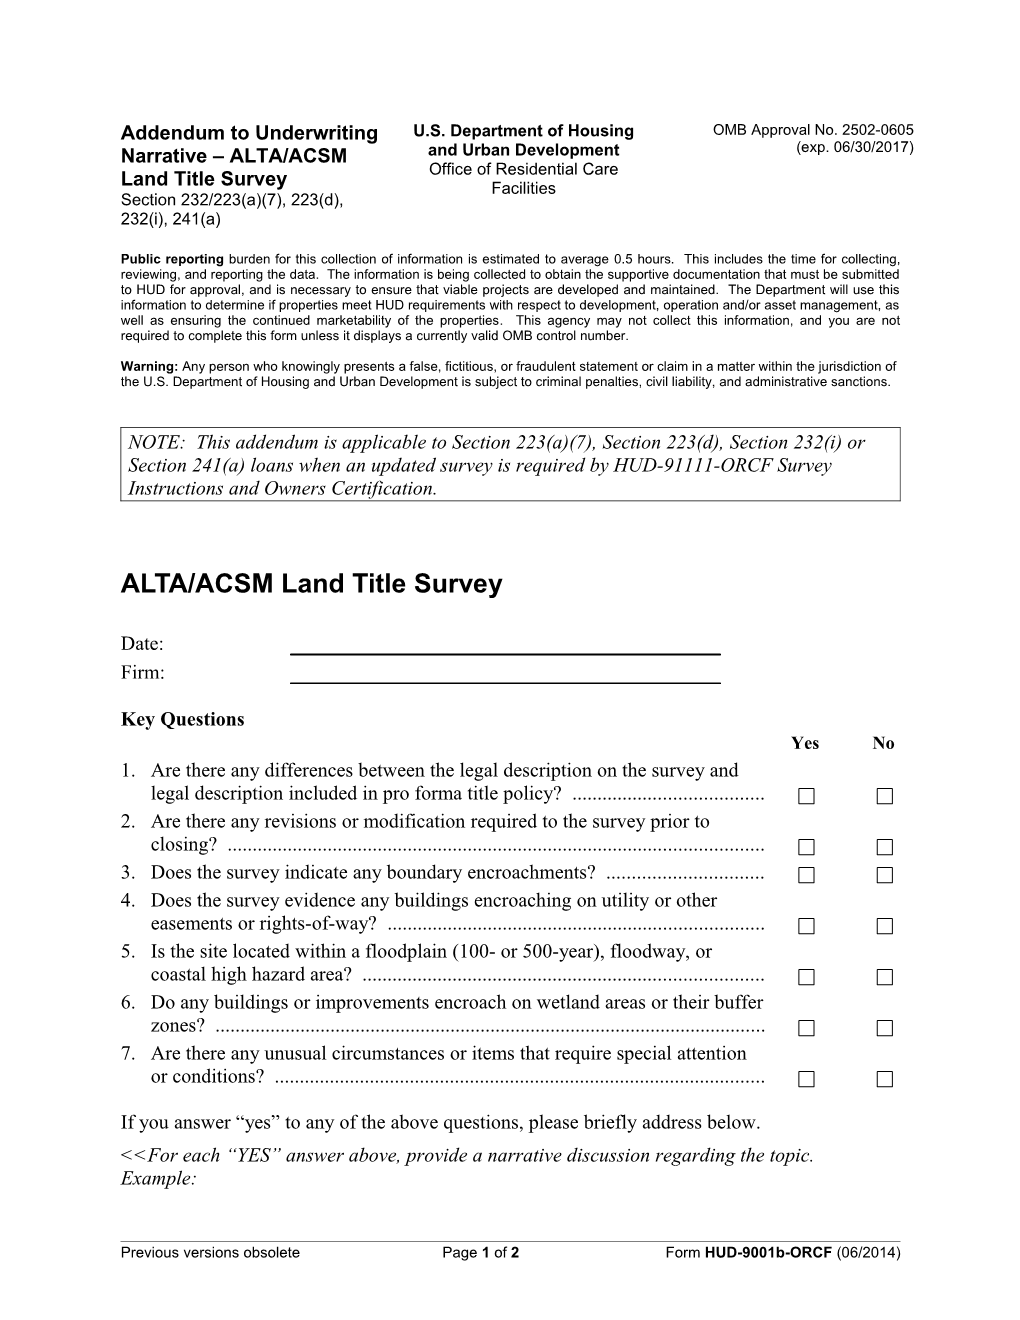 ALTA/ACSM Land Title Survey